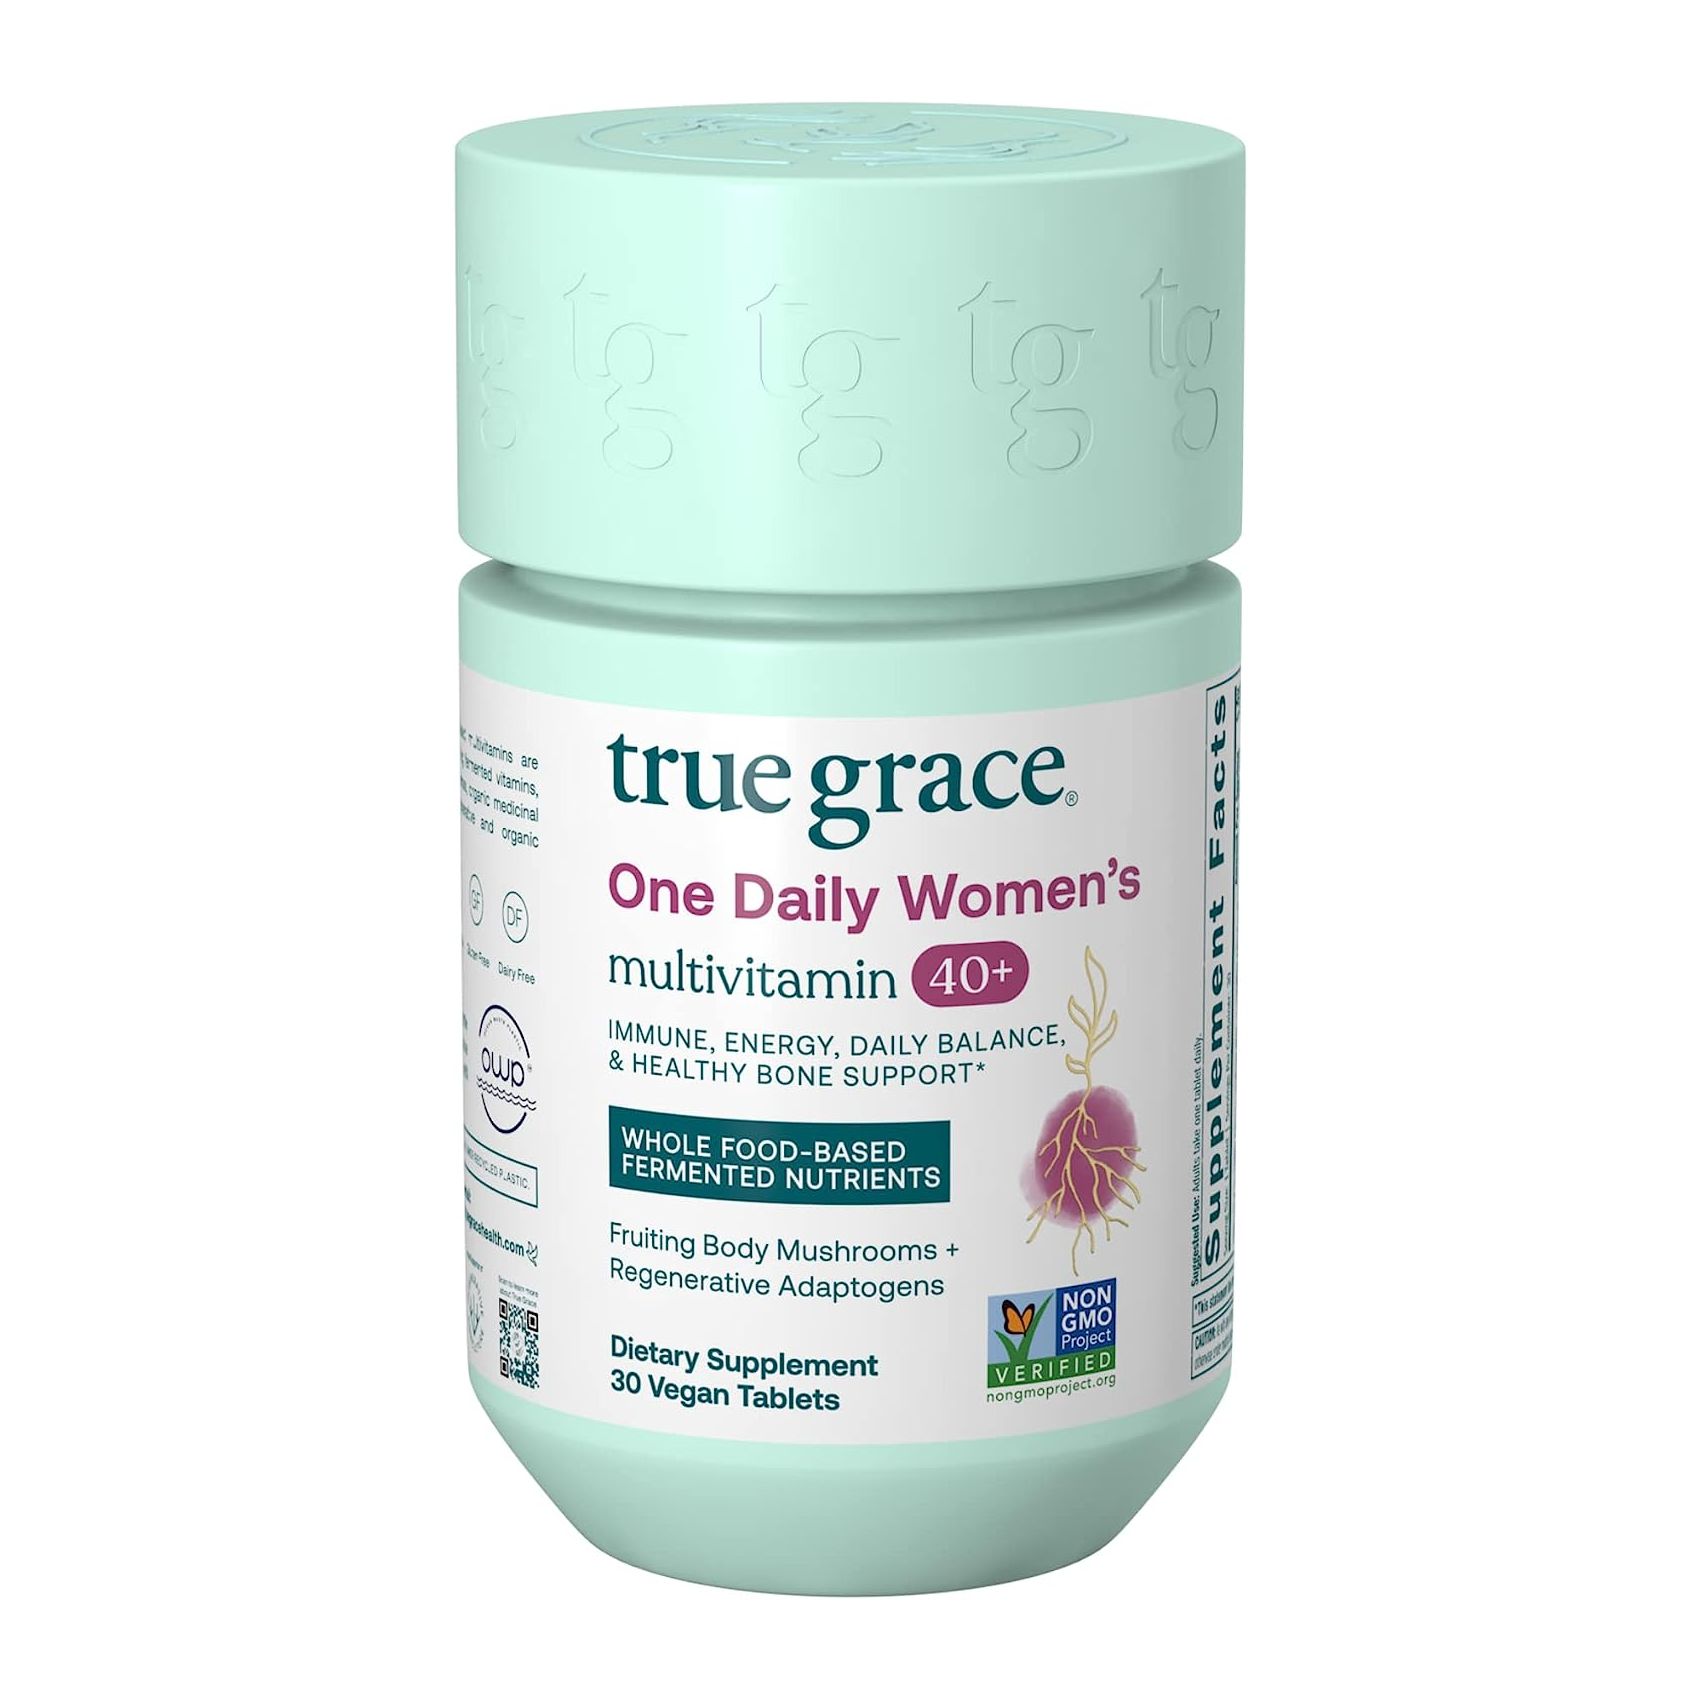 Мультивитамины True Grace One Daily Women’s 40+, 30 таблеток цена и фото